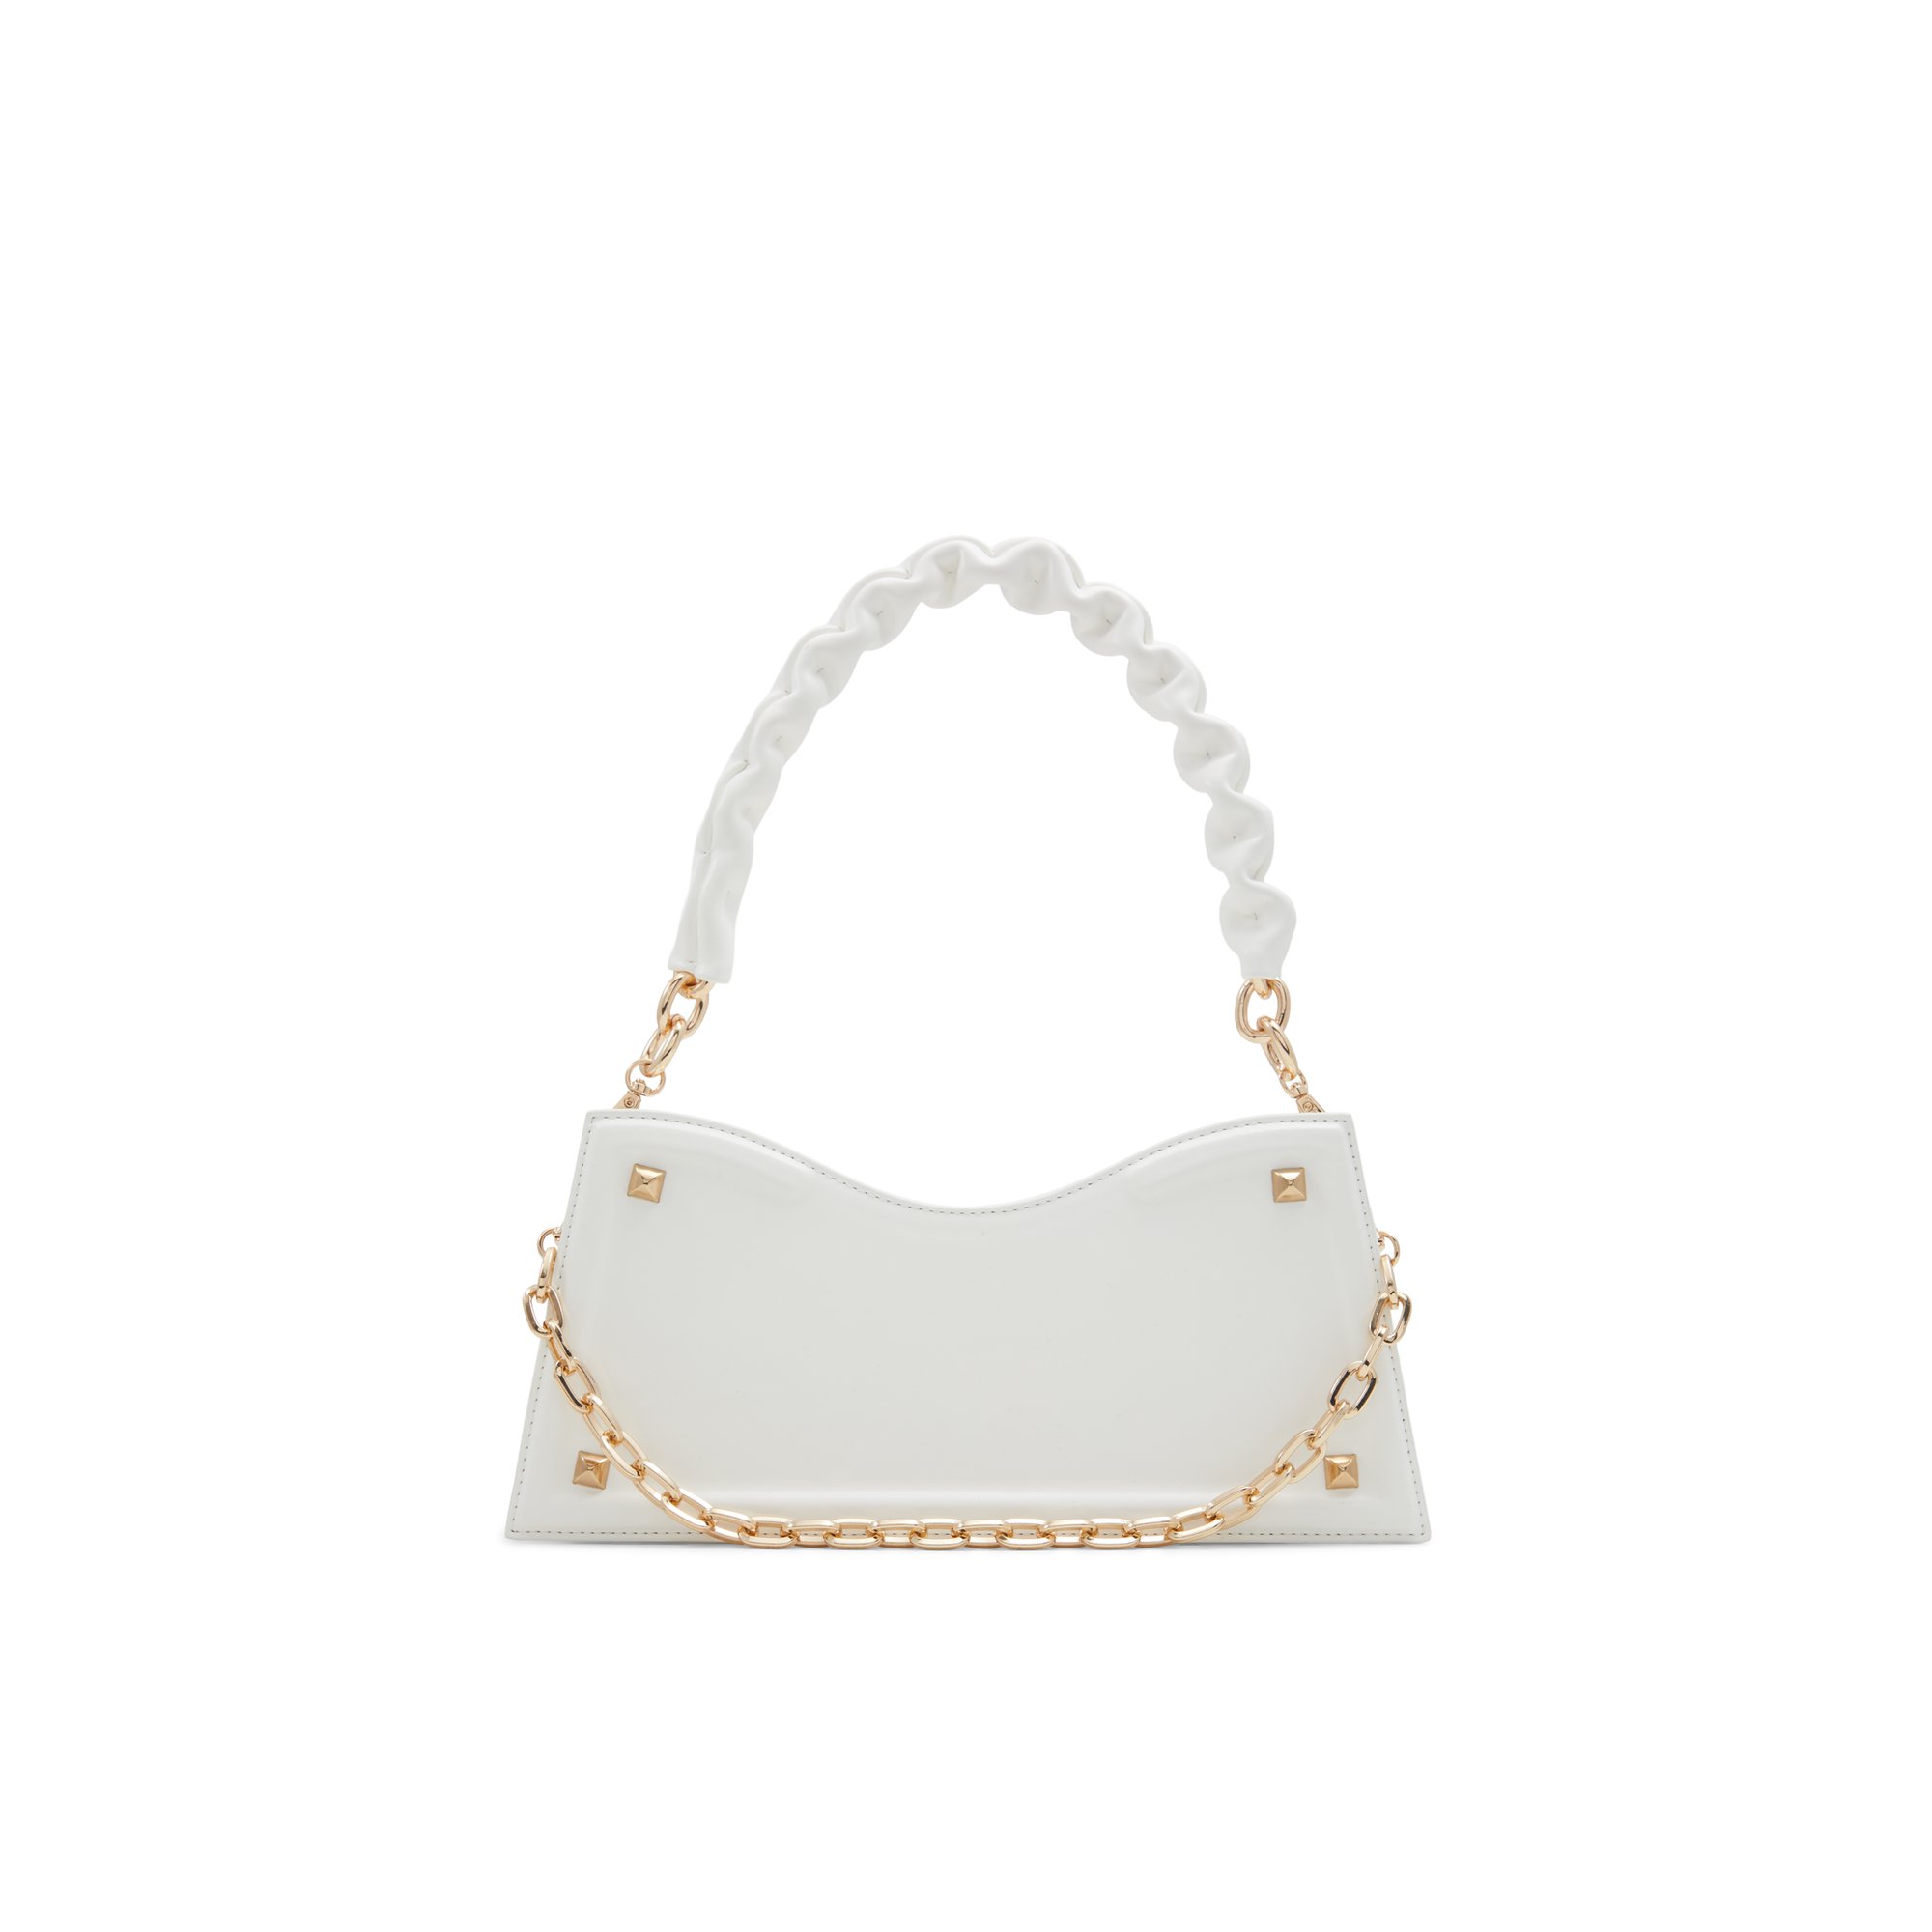 ALDO Bonitax - Women's Shoulder Bag Handbag - White